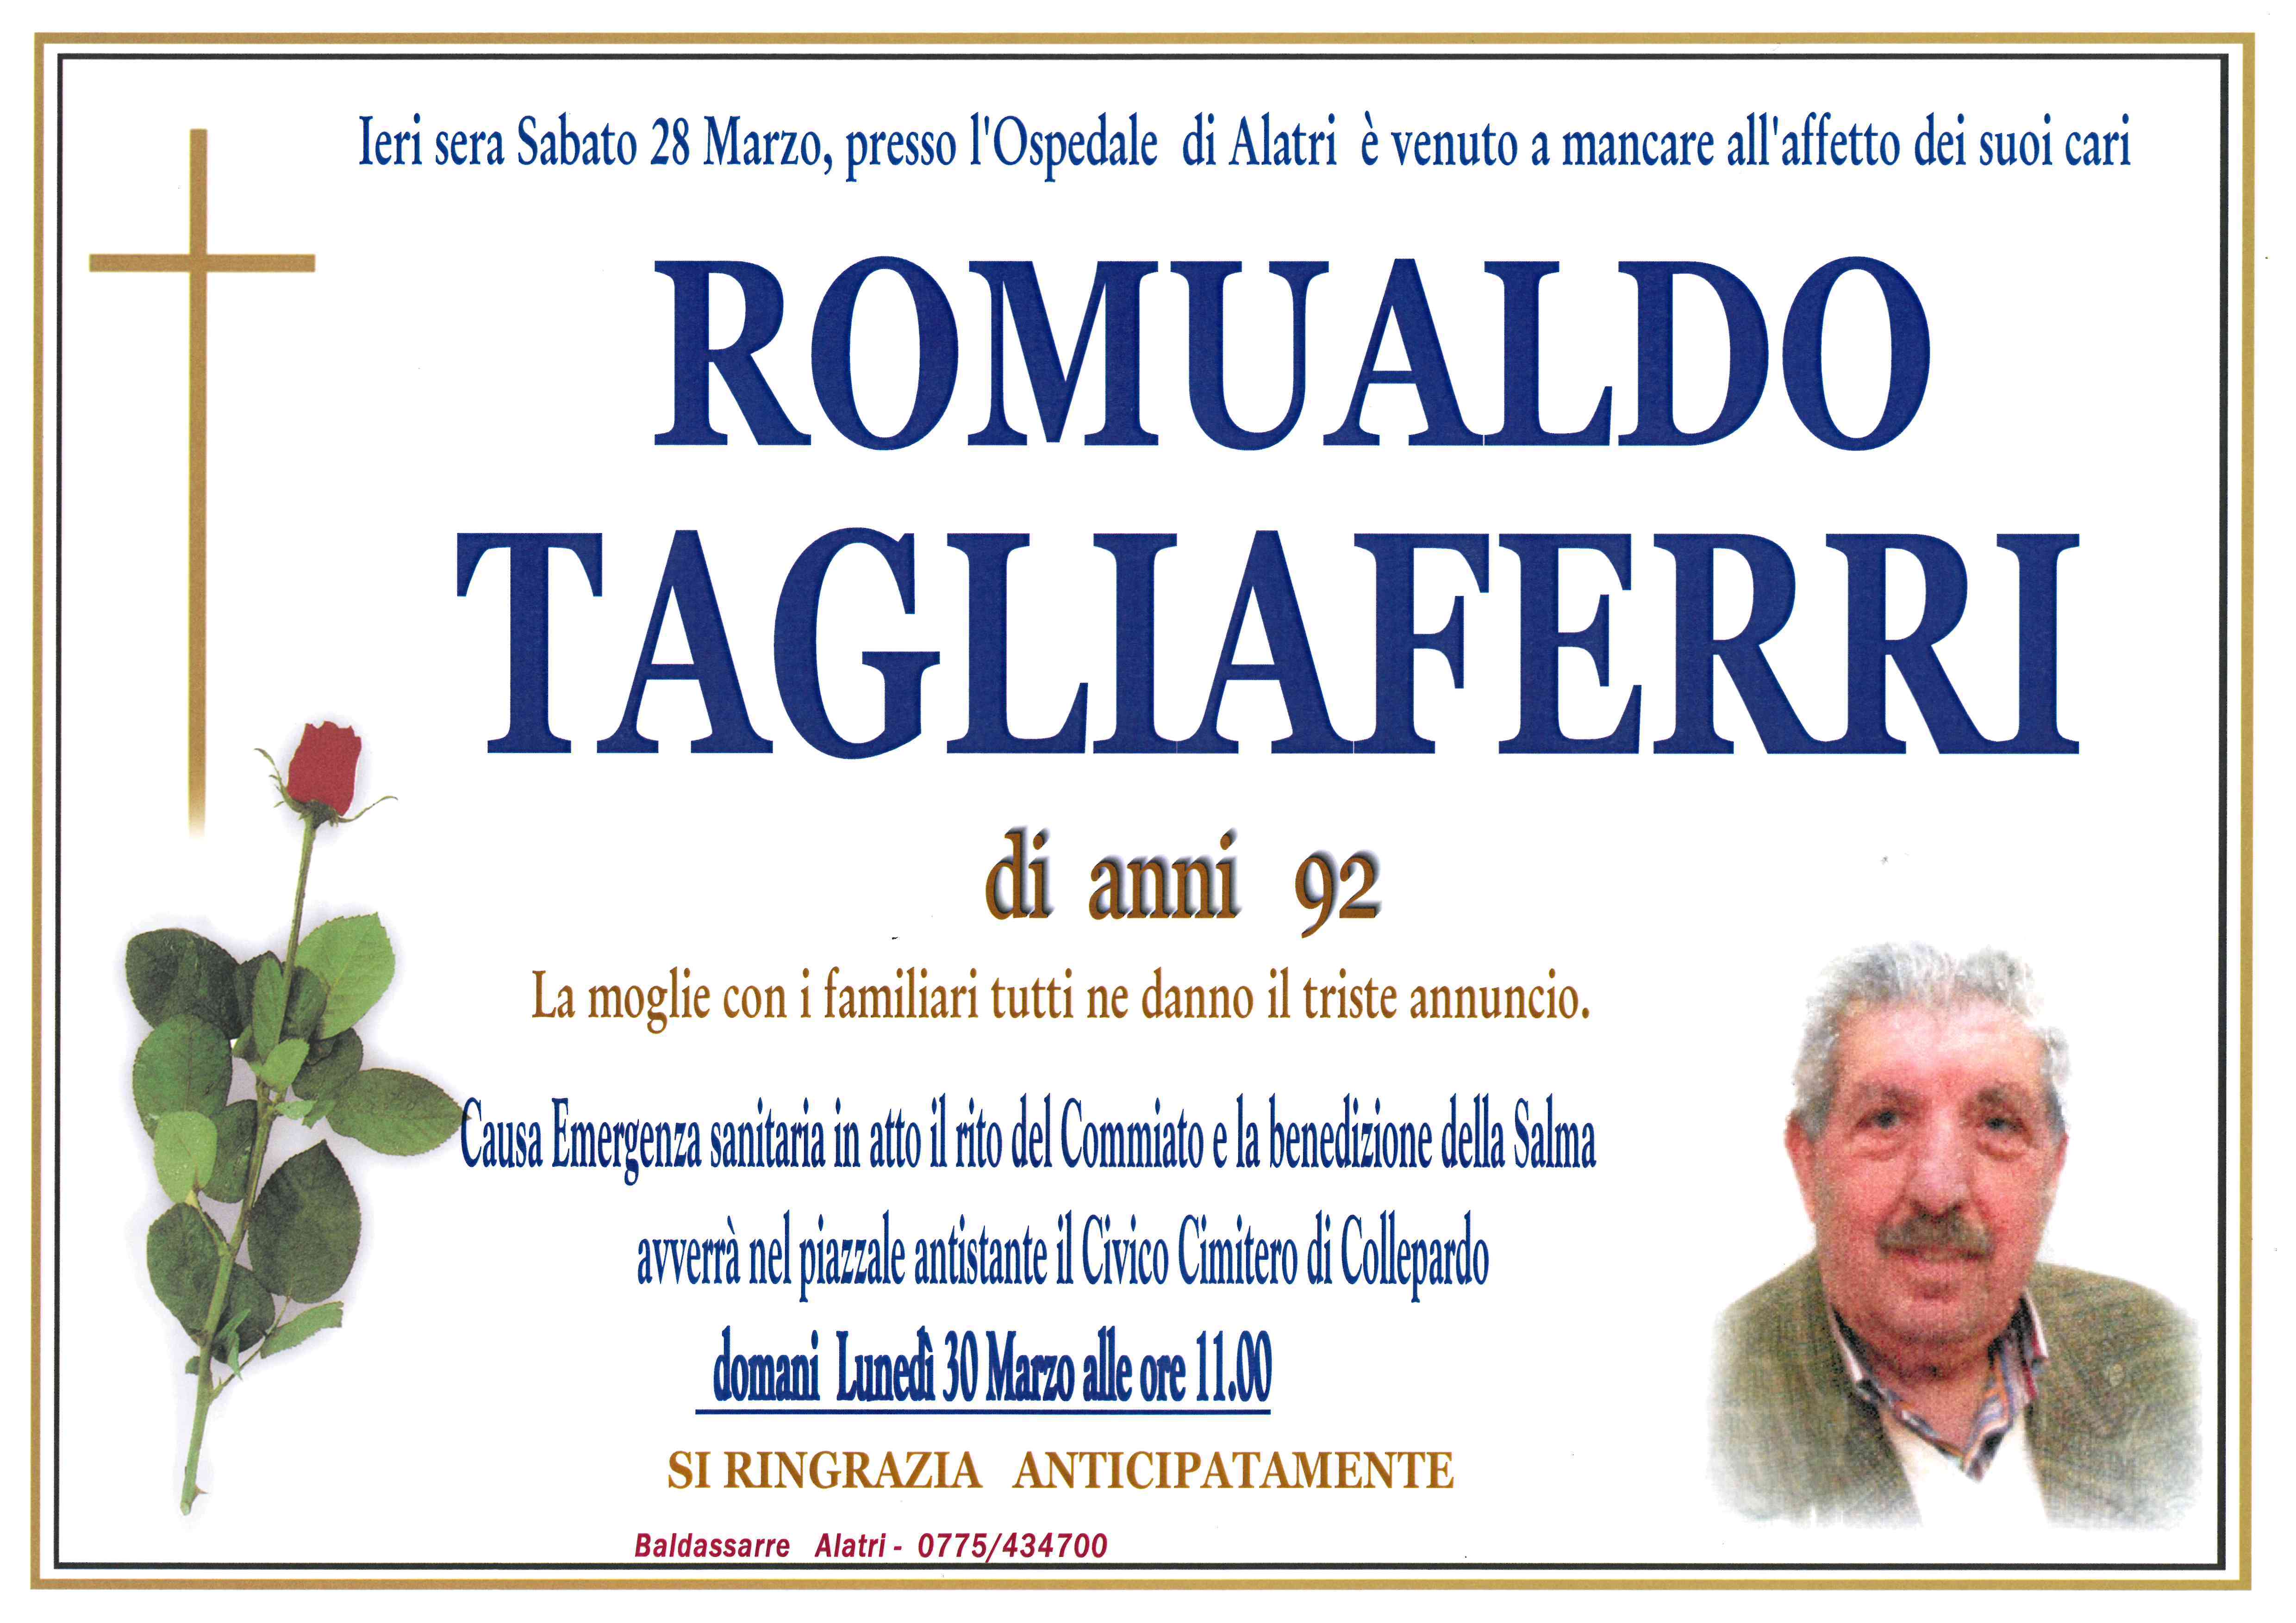 Romualdo Tagliaferri